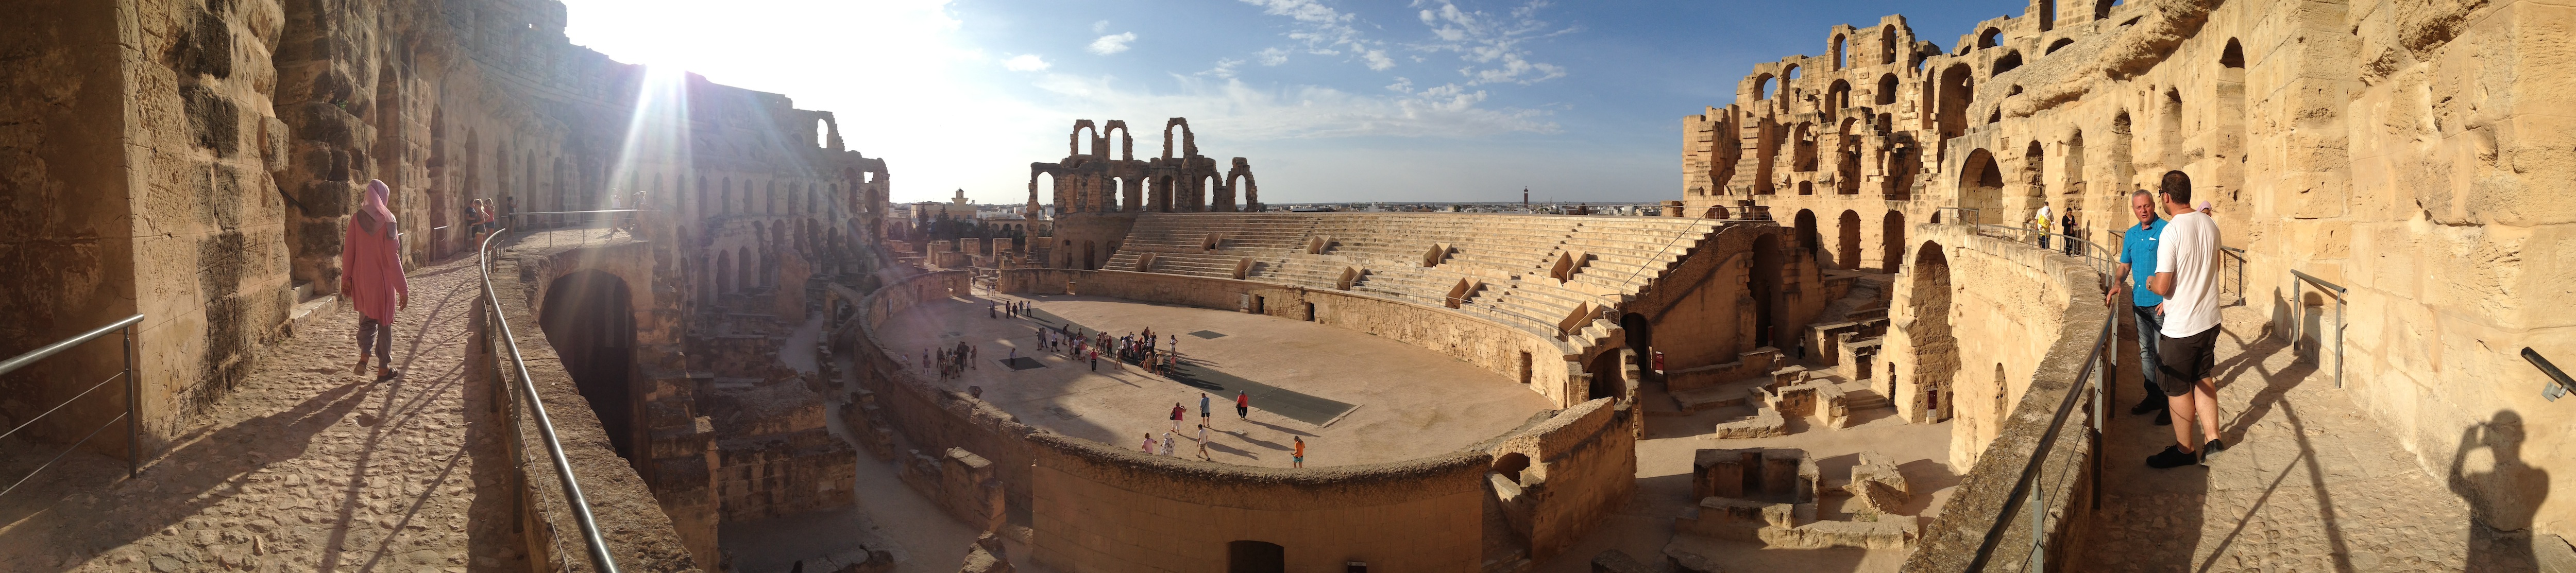 Vos photos panoramiques iPhone, Ã©pisode 4 : USA, Tunisie, Londres ...